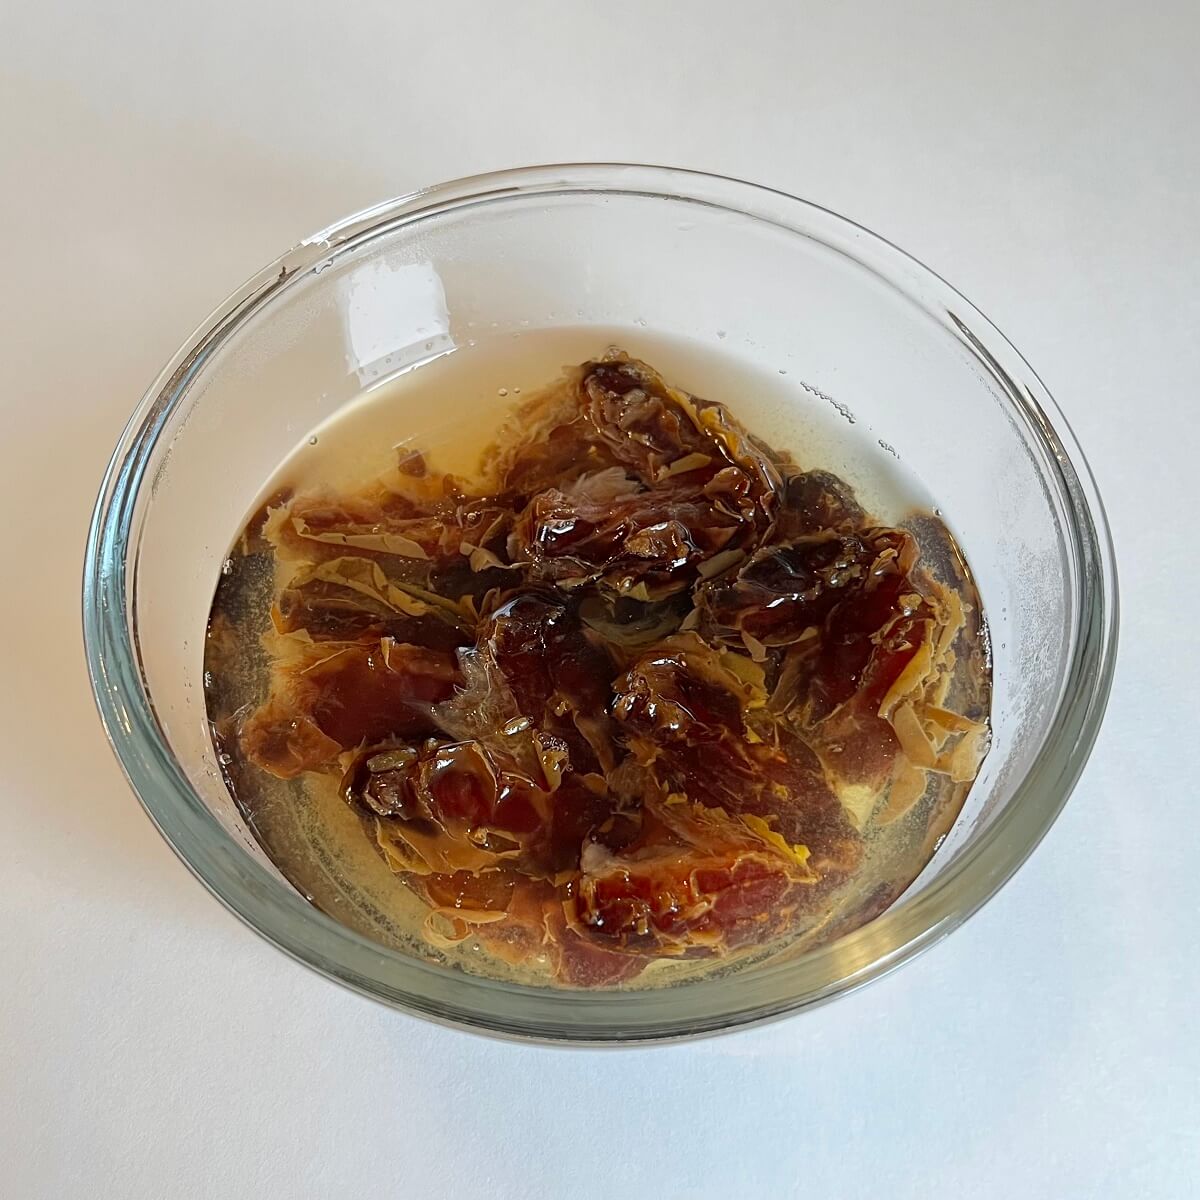 Medjool dates soaking in hot water in a glass bowl.